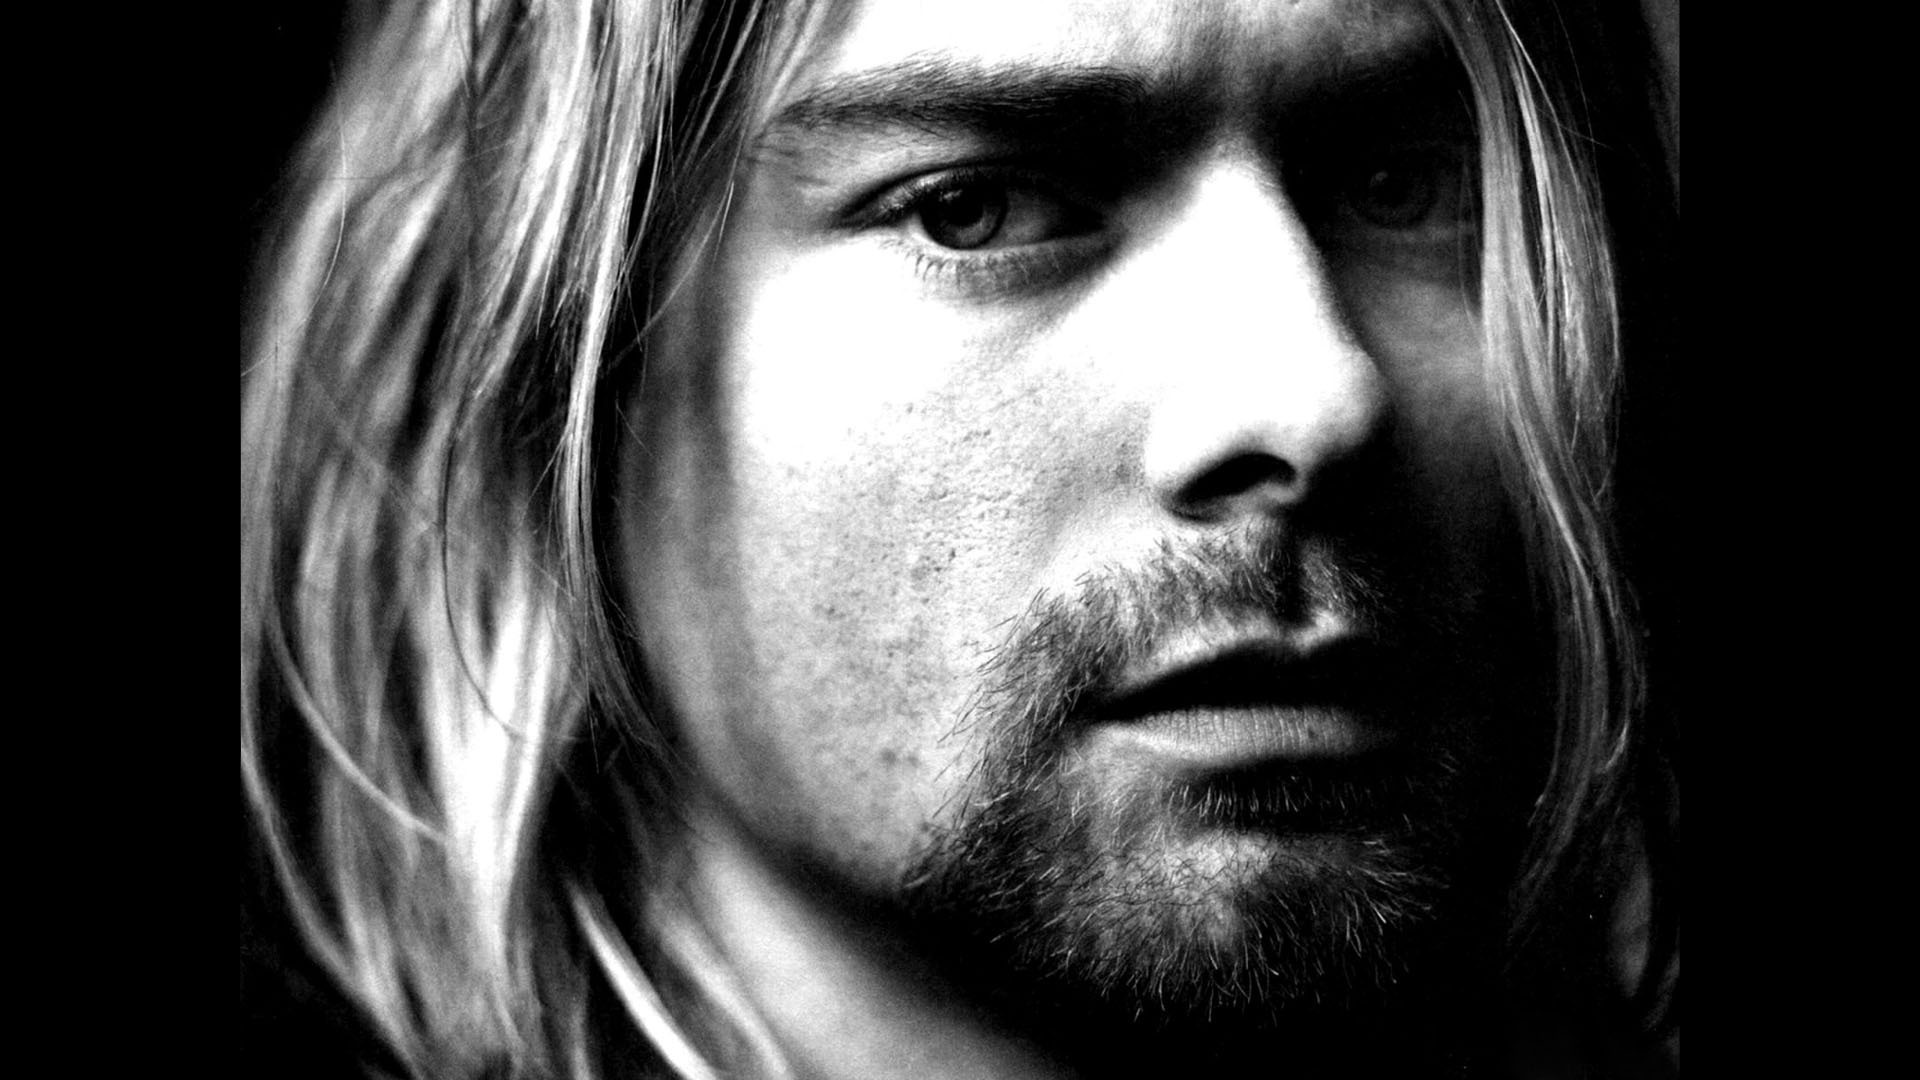 Kurt Cobain: